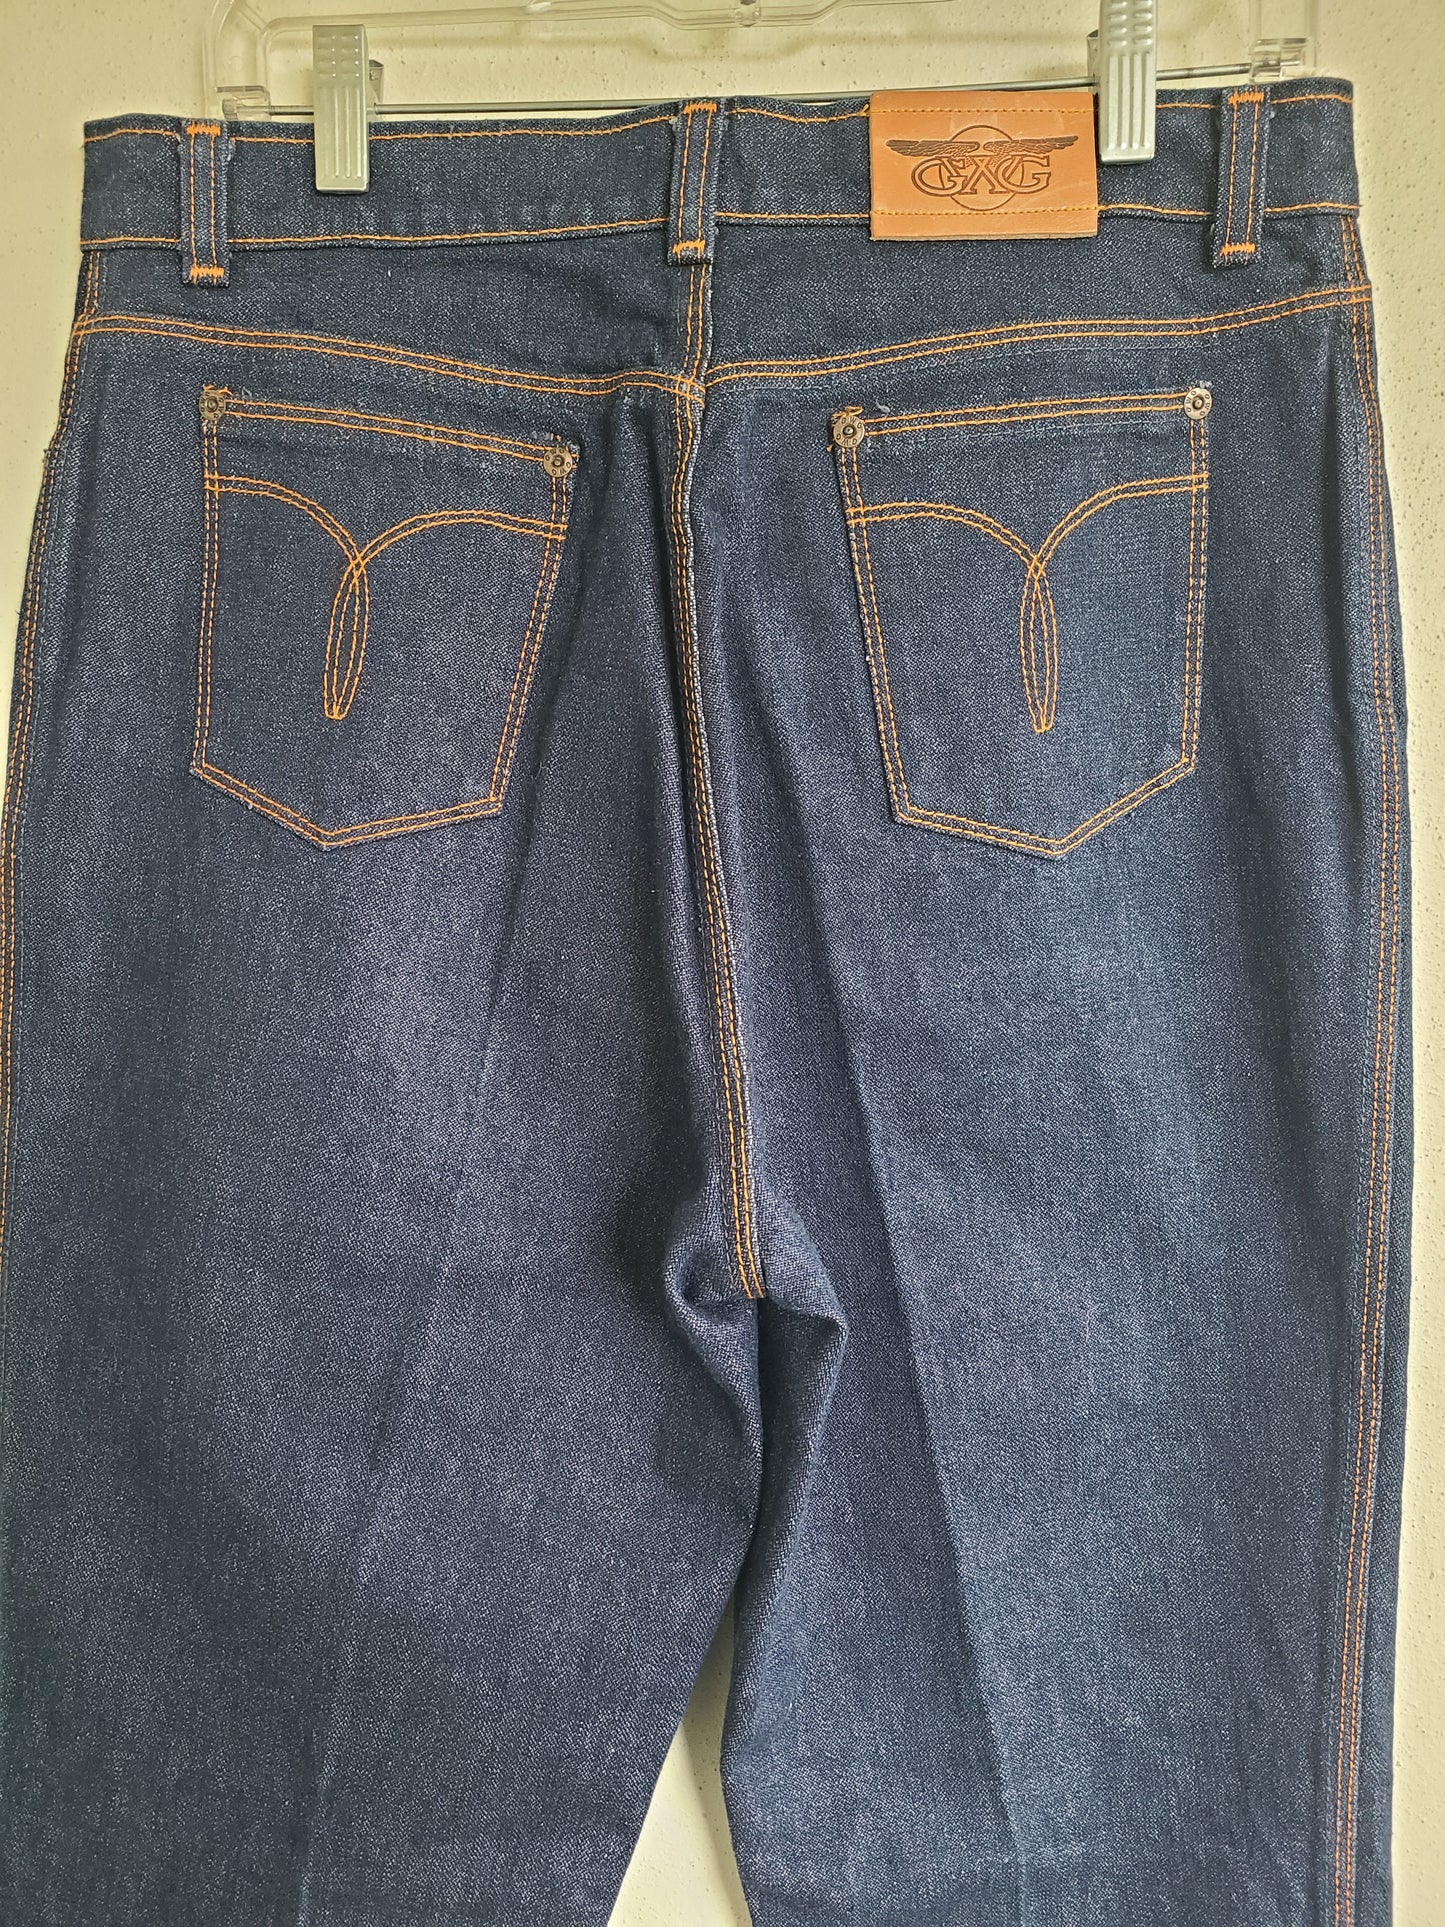 The Joan Dark Wash High Waisted GwG Jeans 36 x 32